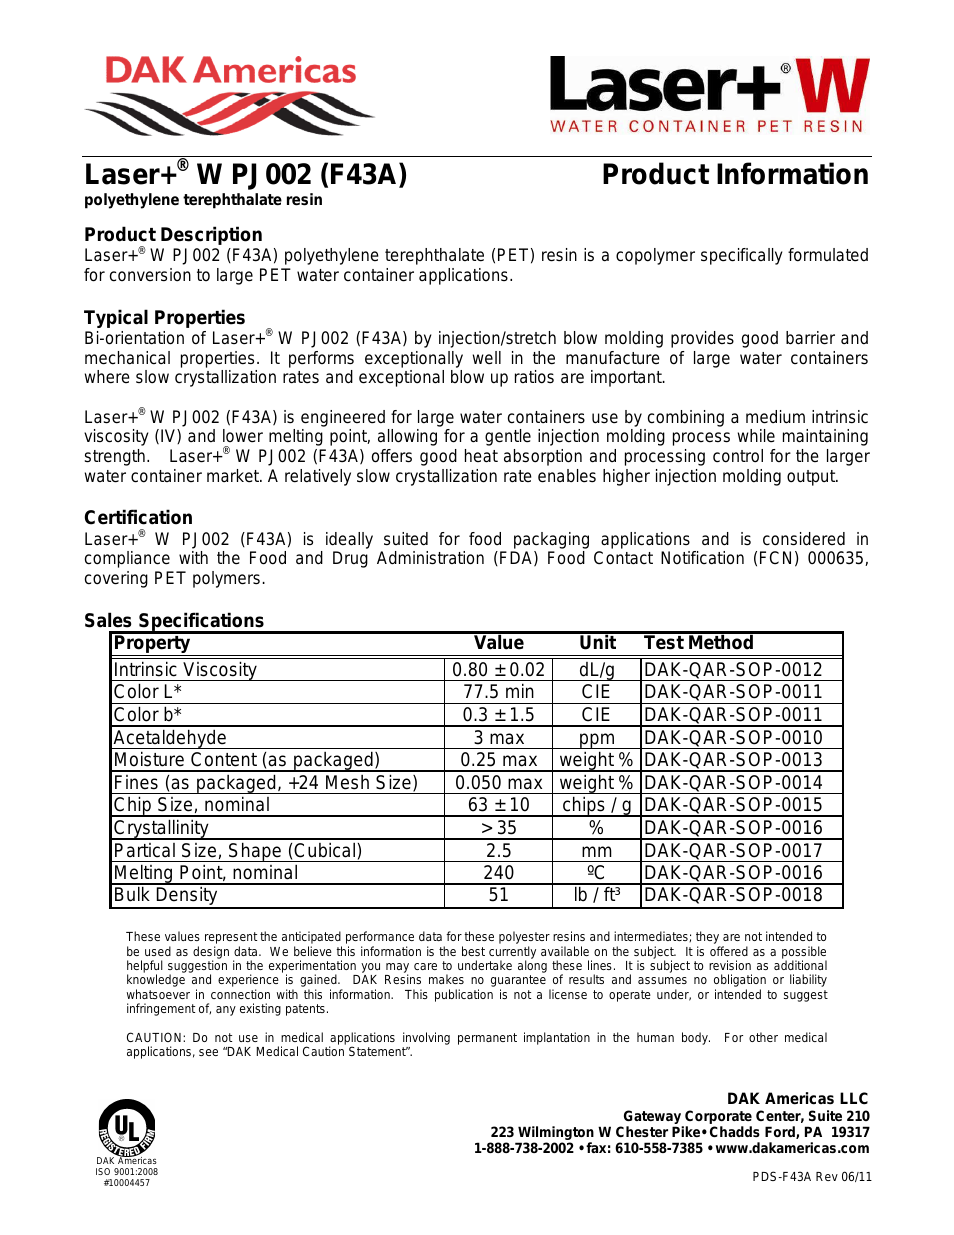 Laser+ W PJ002 F43A